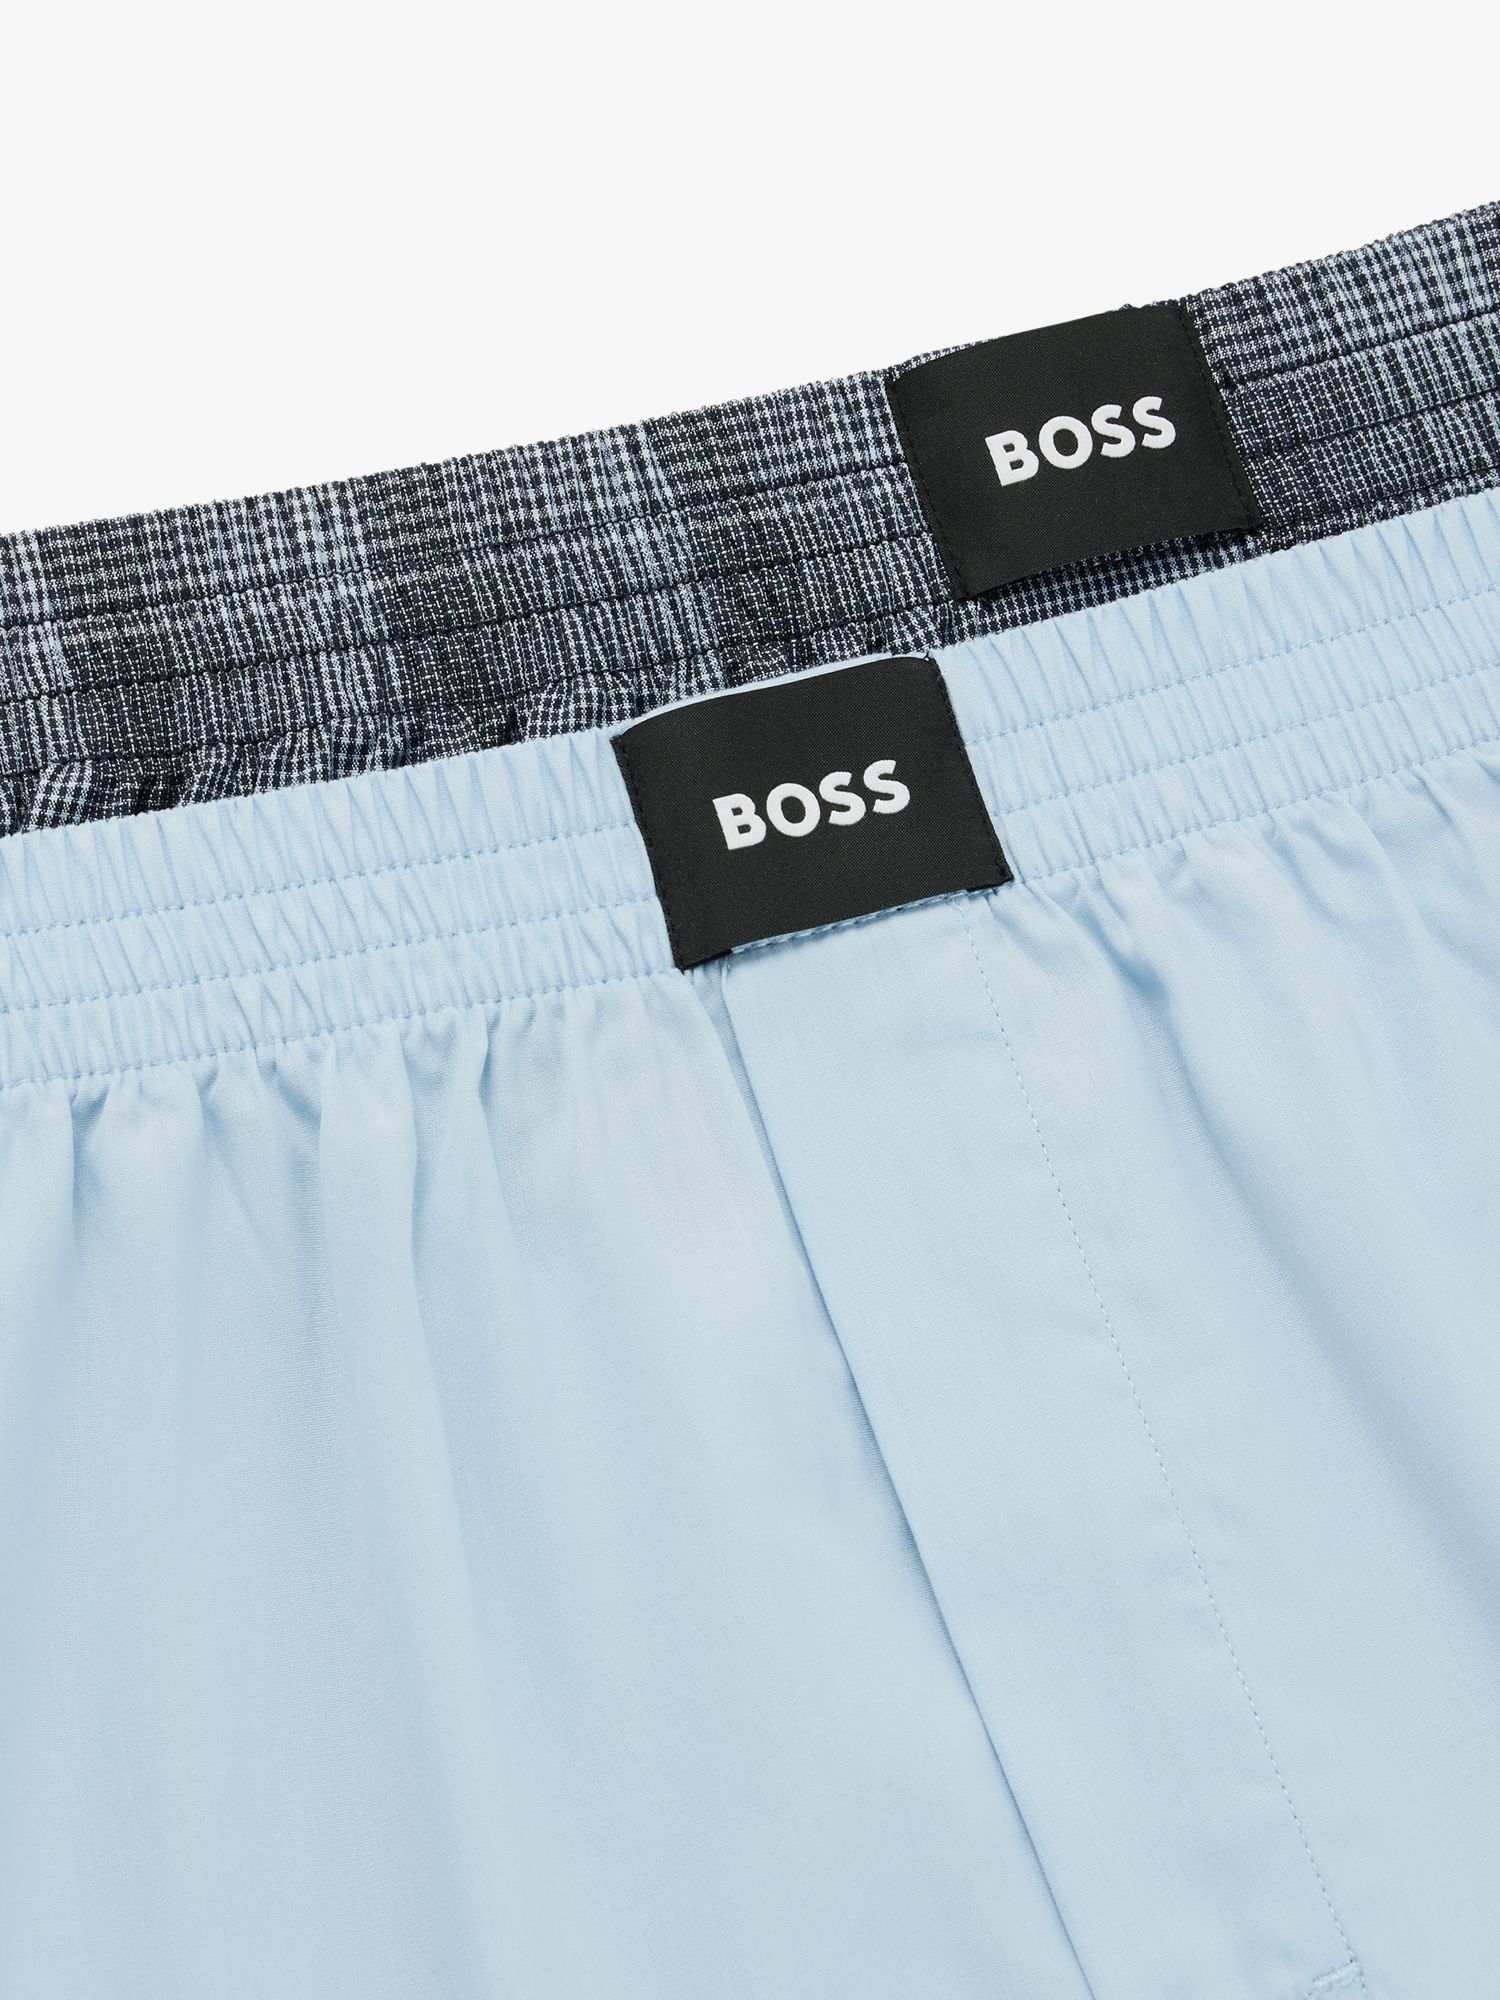 BOSS Plain and Check Cotton Boxer Shorts, Pack of 2, Dark Blue/Light Blue, XXL